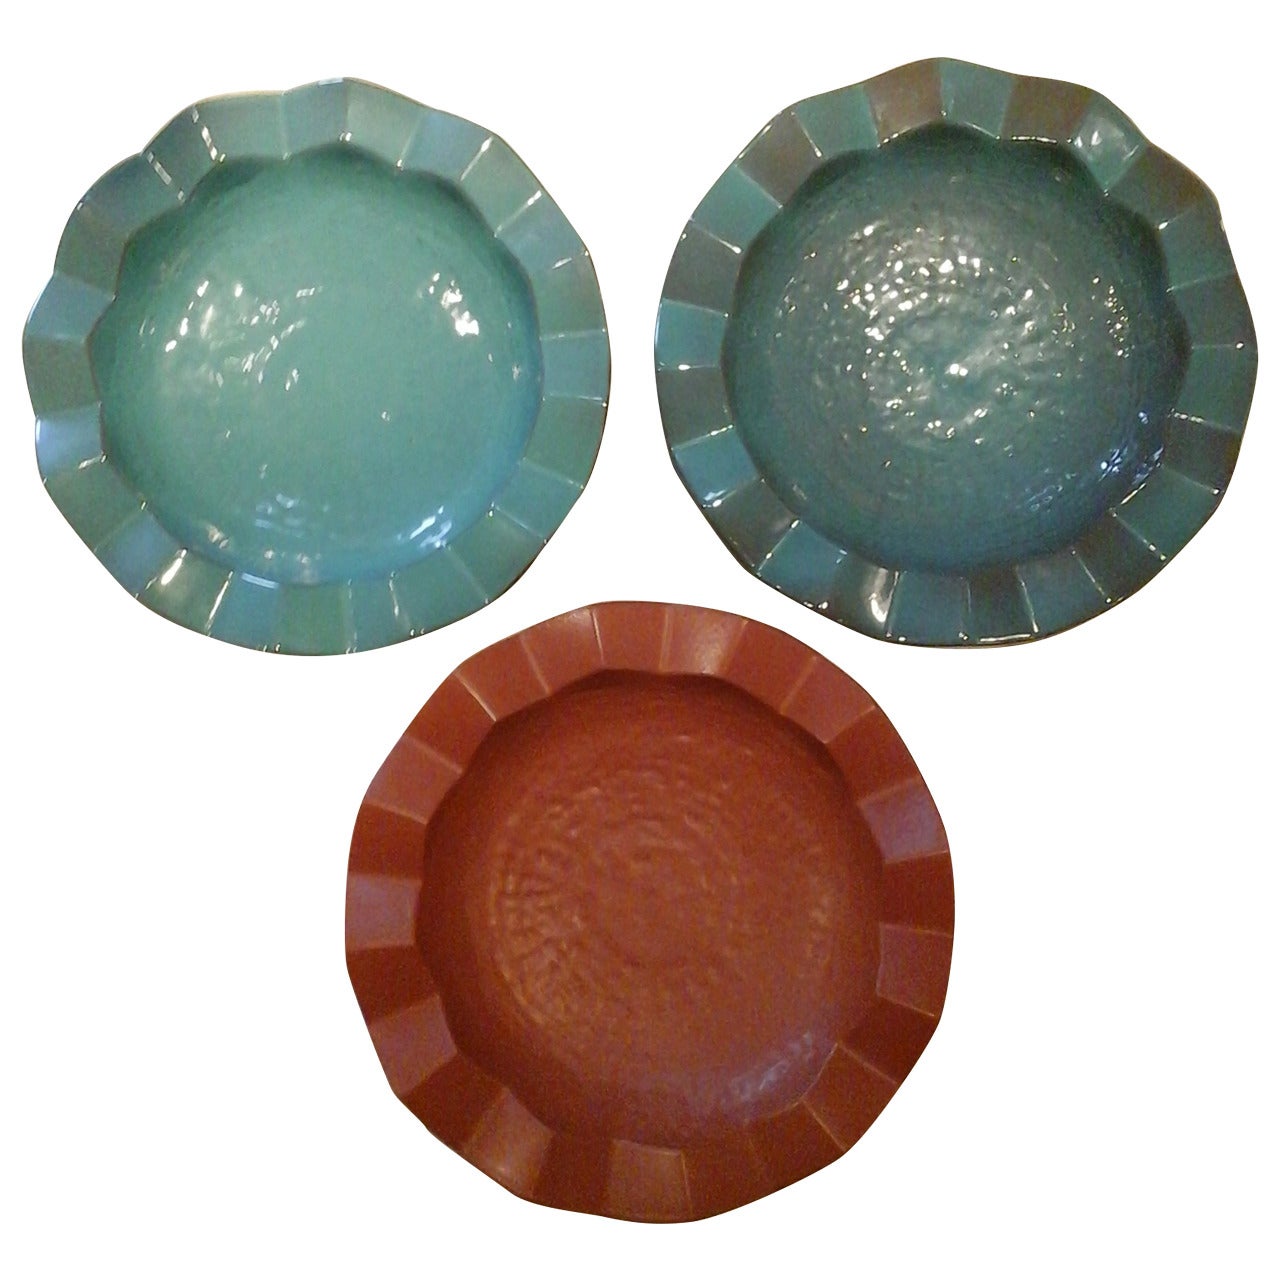 Midcentury Zig Zag Ceramic Bowls by Design Technics